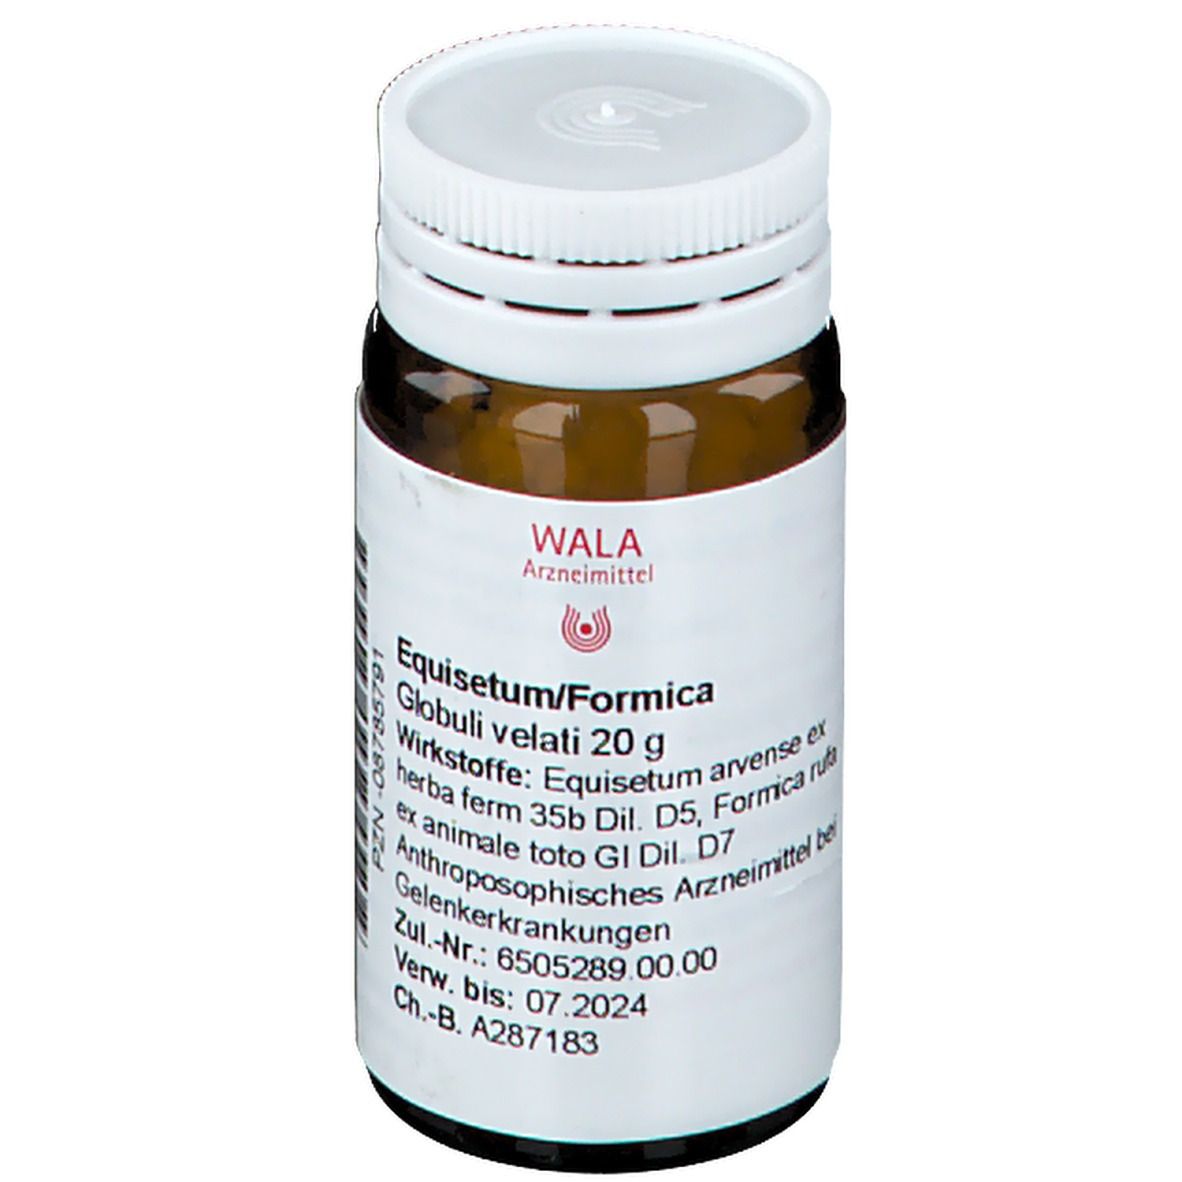 WALA® EQUISETUM/FORMICA Globuli